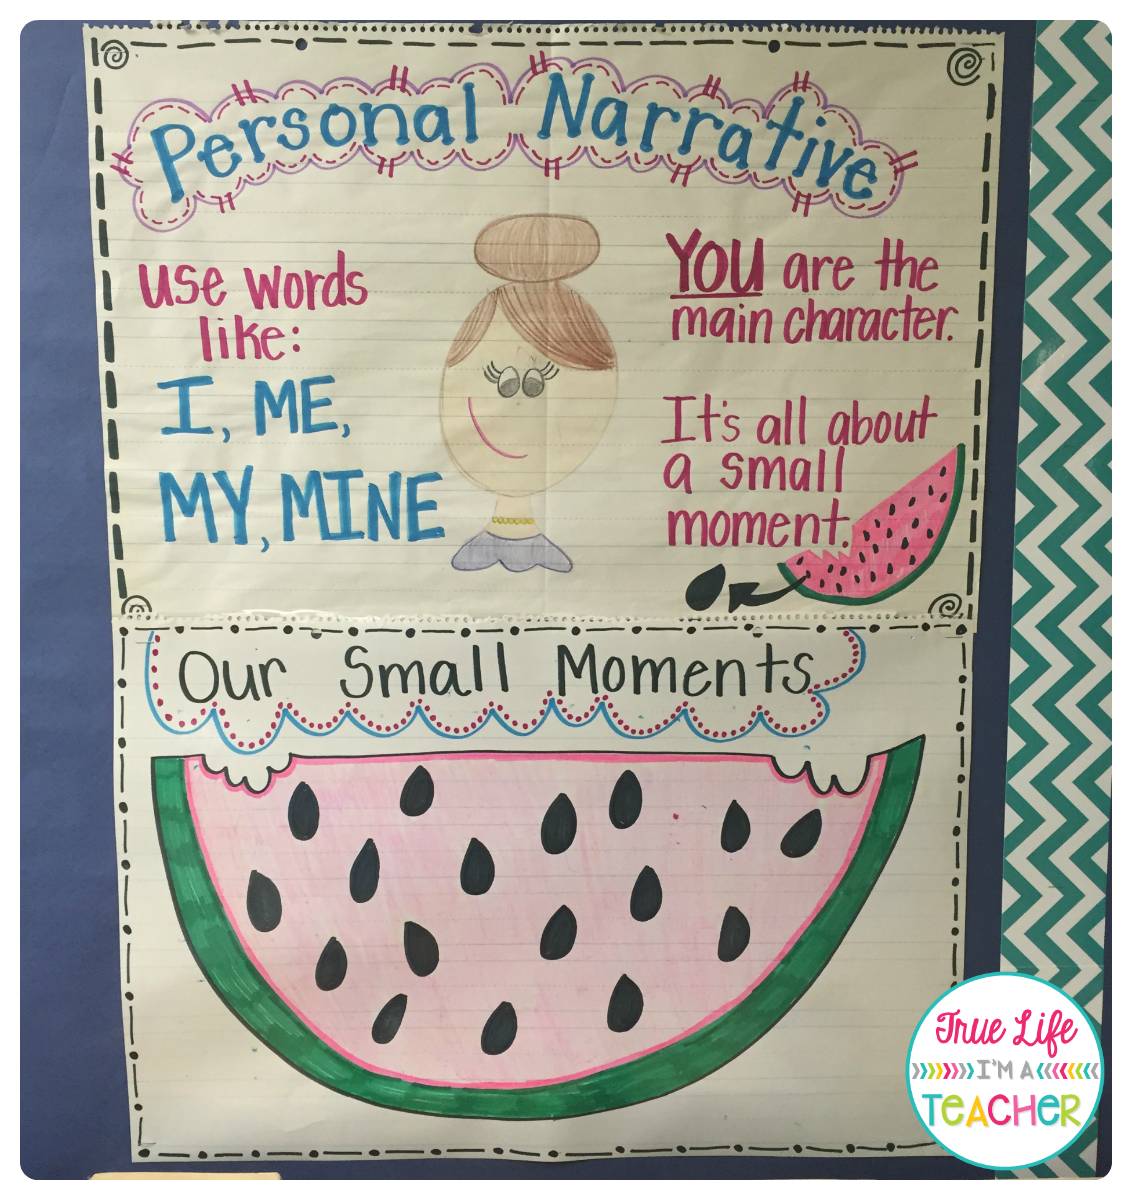 Personal Narrative Anchor Chart 3rd Grade